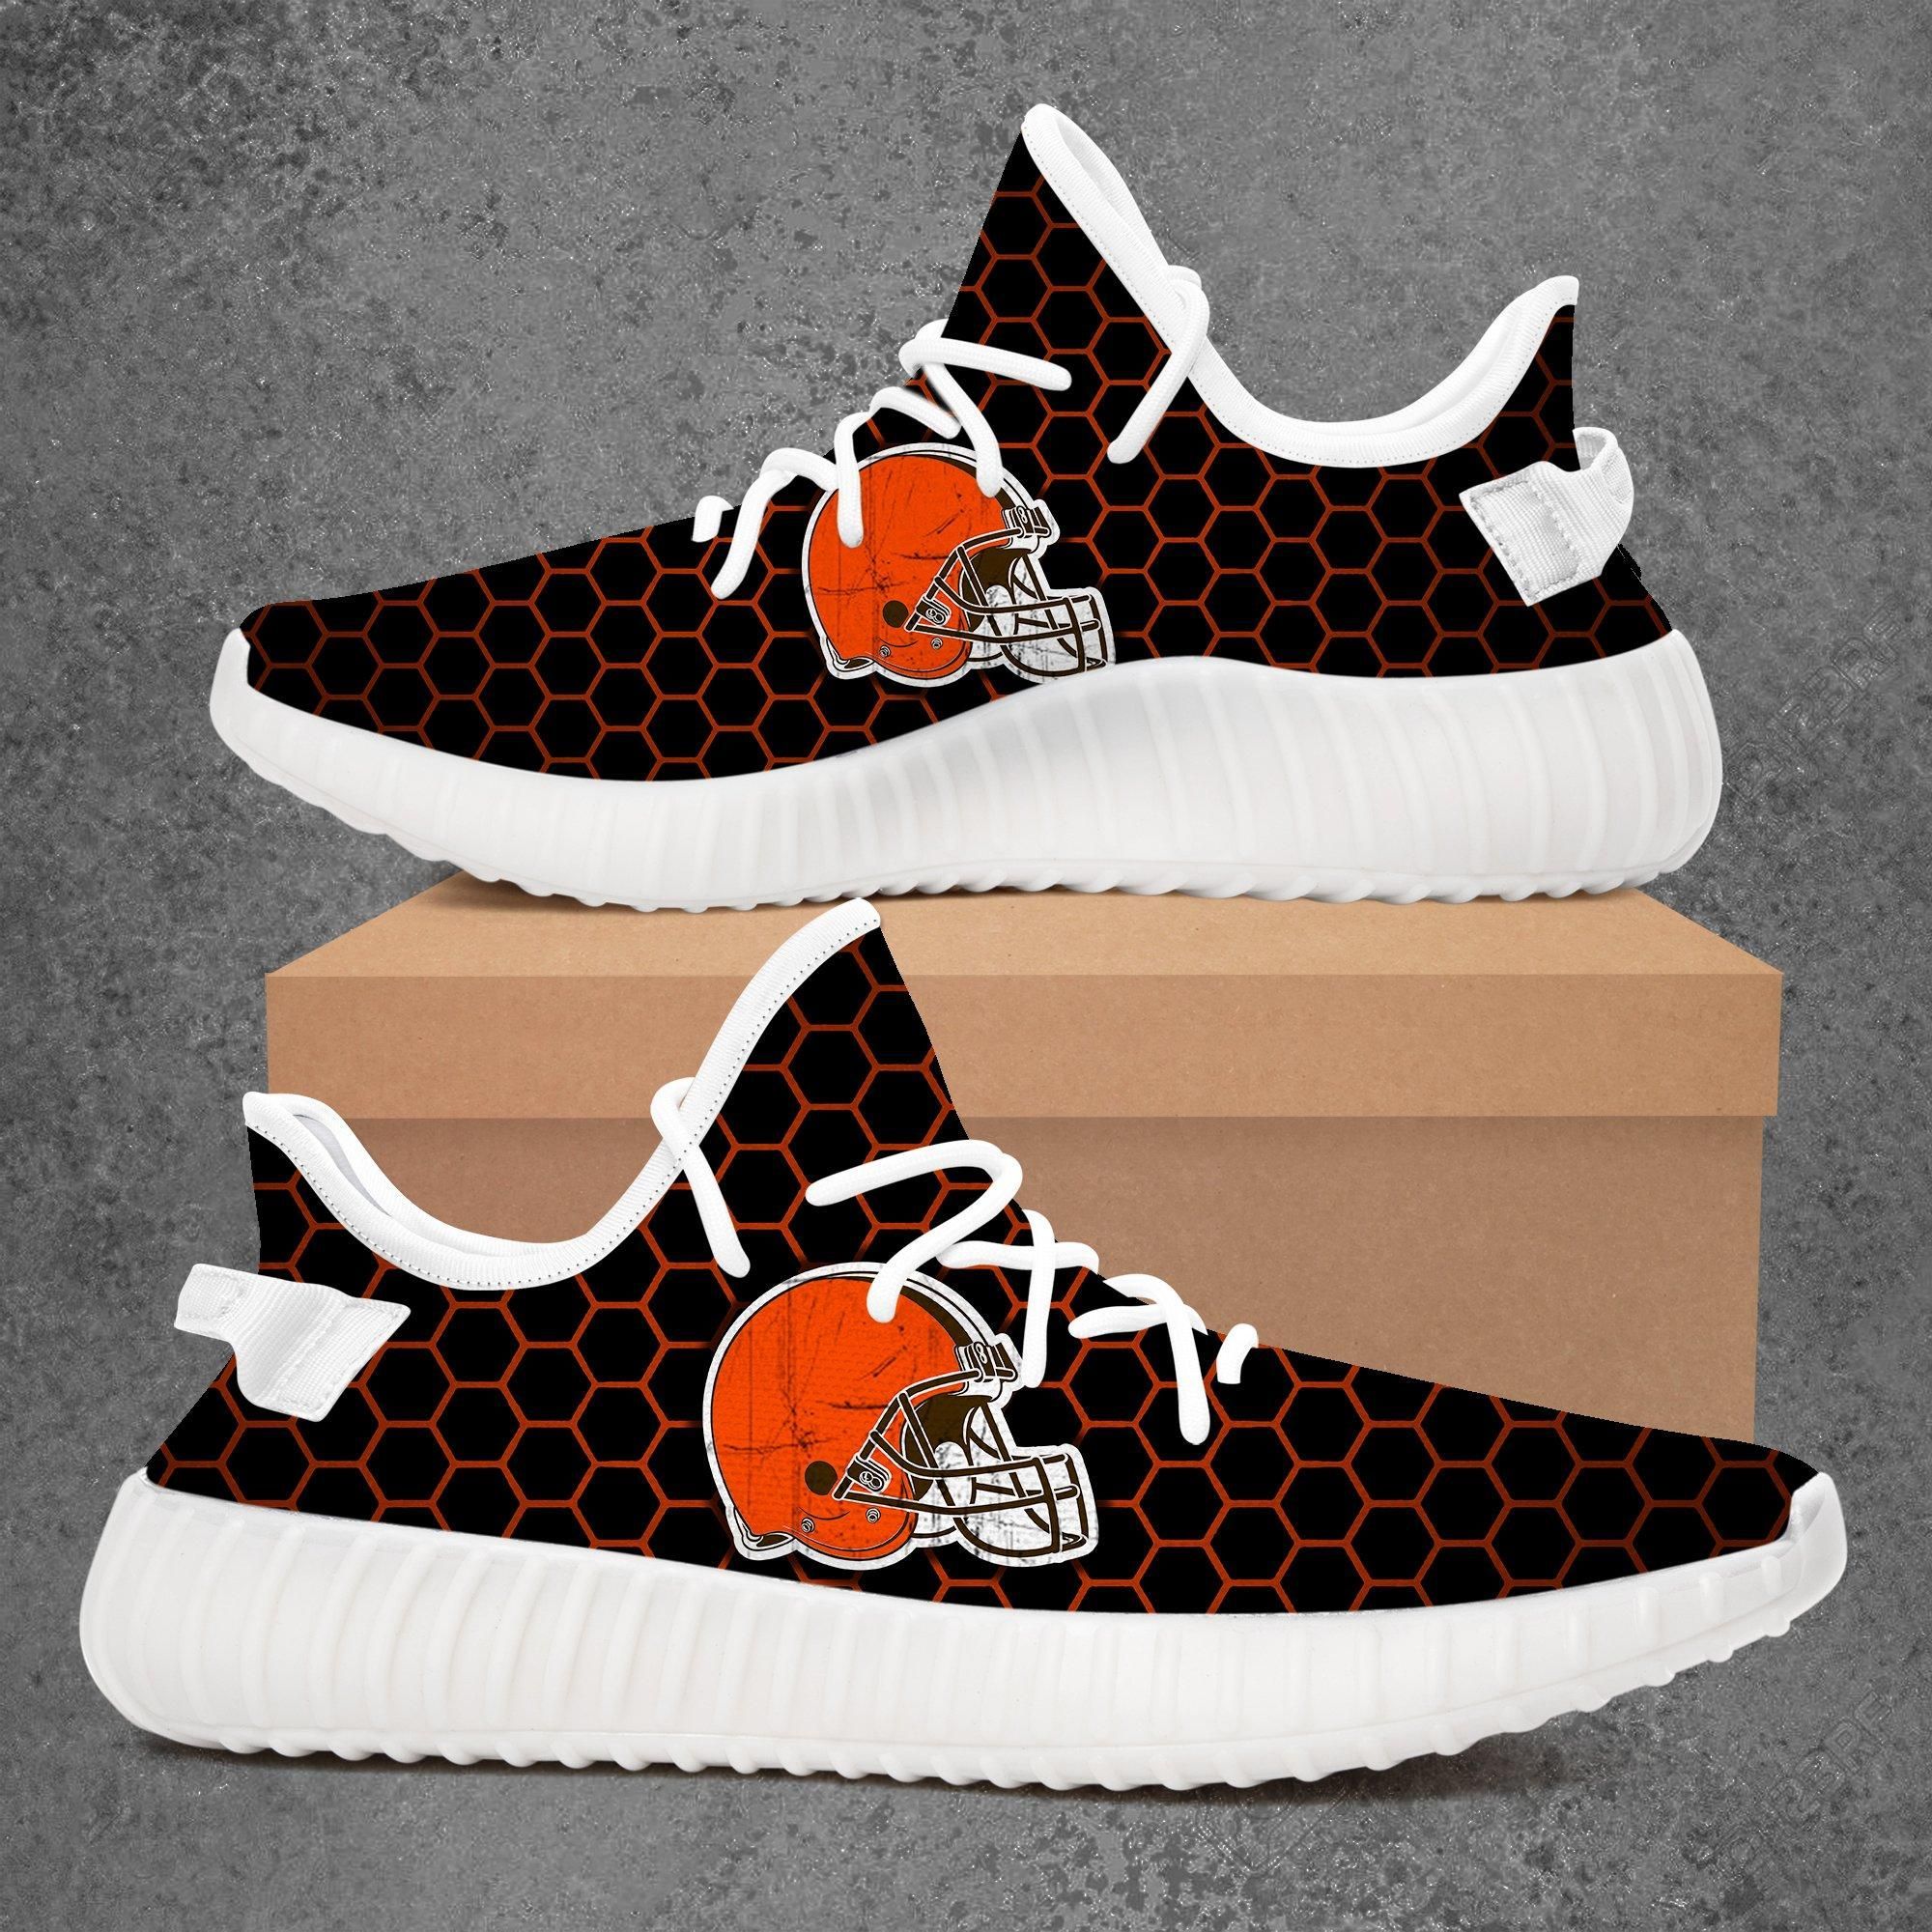 Cleveland Browns NFL Teams Sport Teams Full Print Yeezy-style Sneakers ...